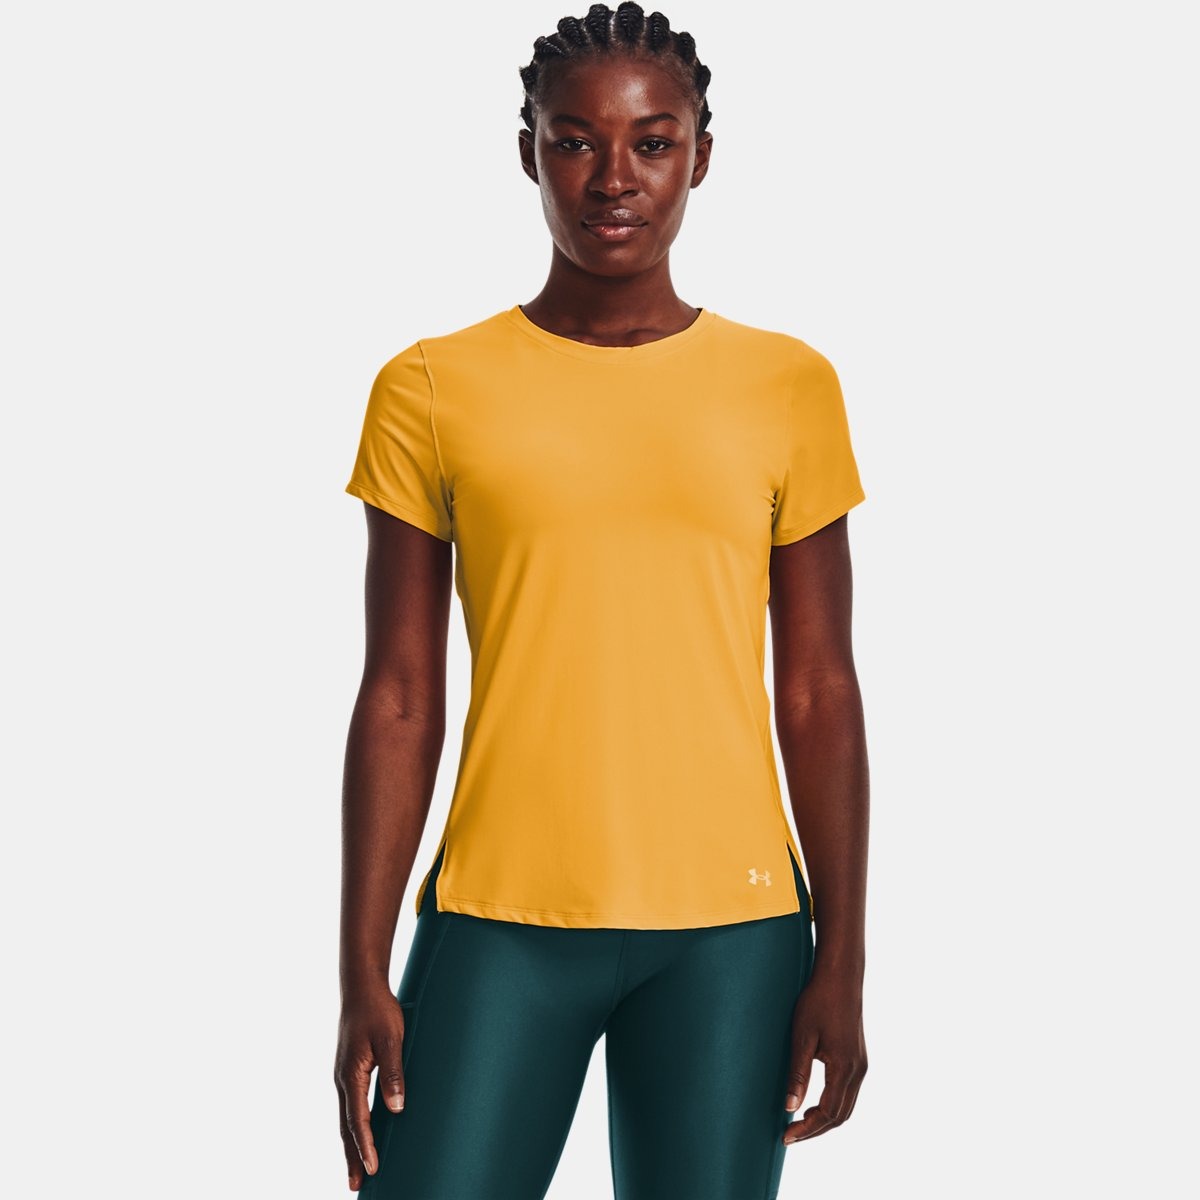 Under Armour - Yellow - T-Shirt - Women GOOFASH